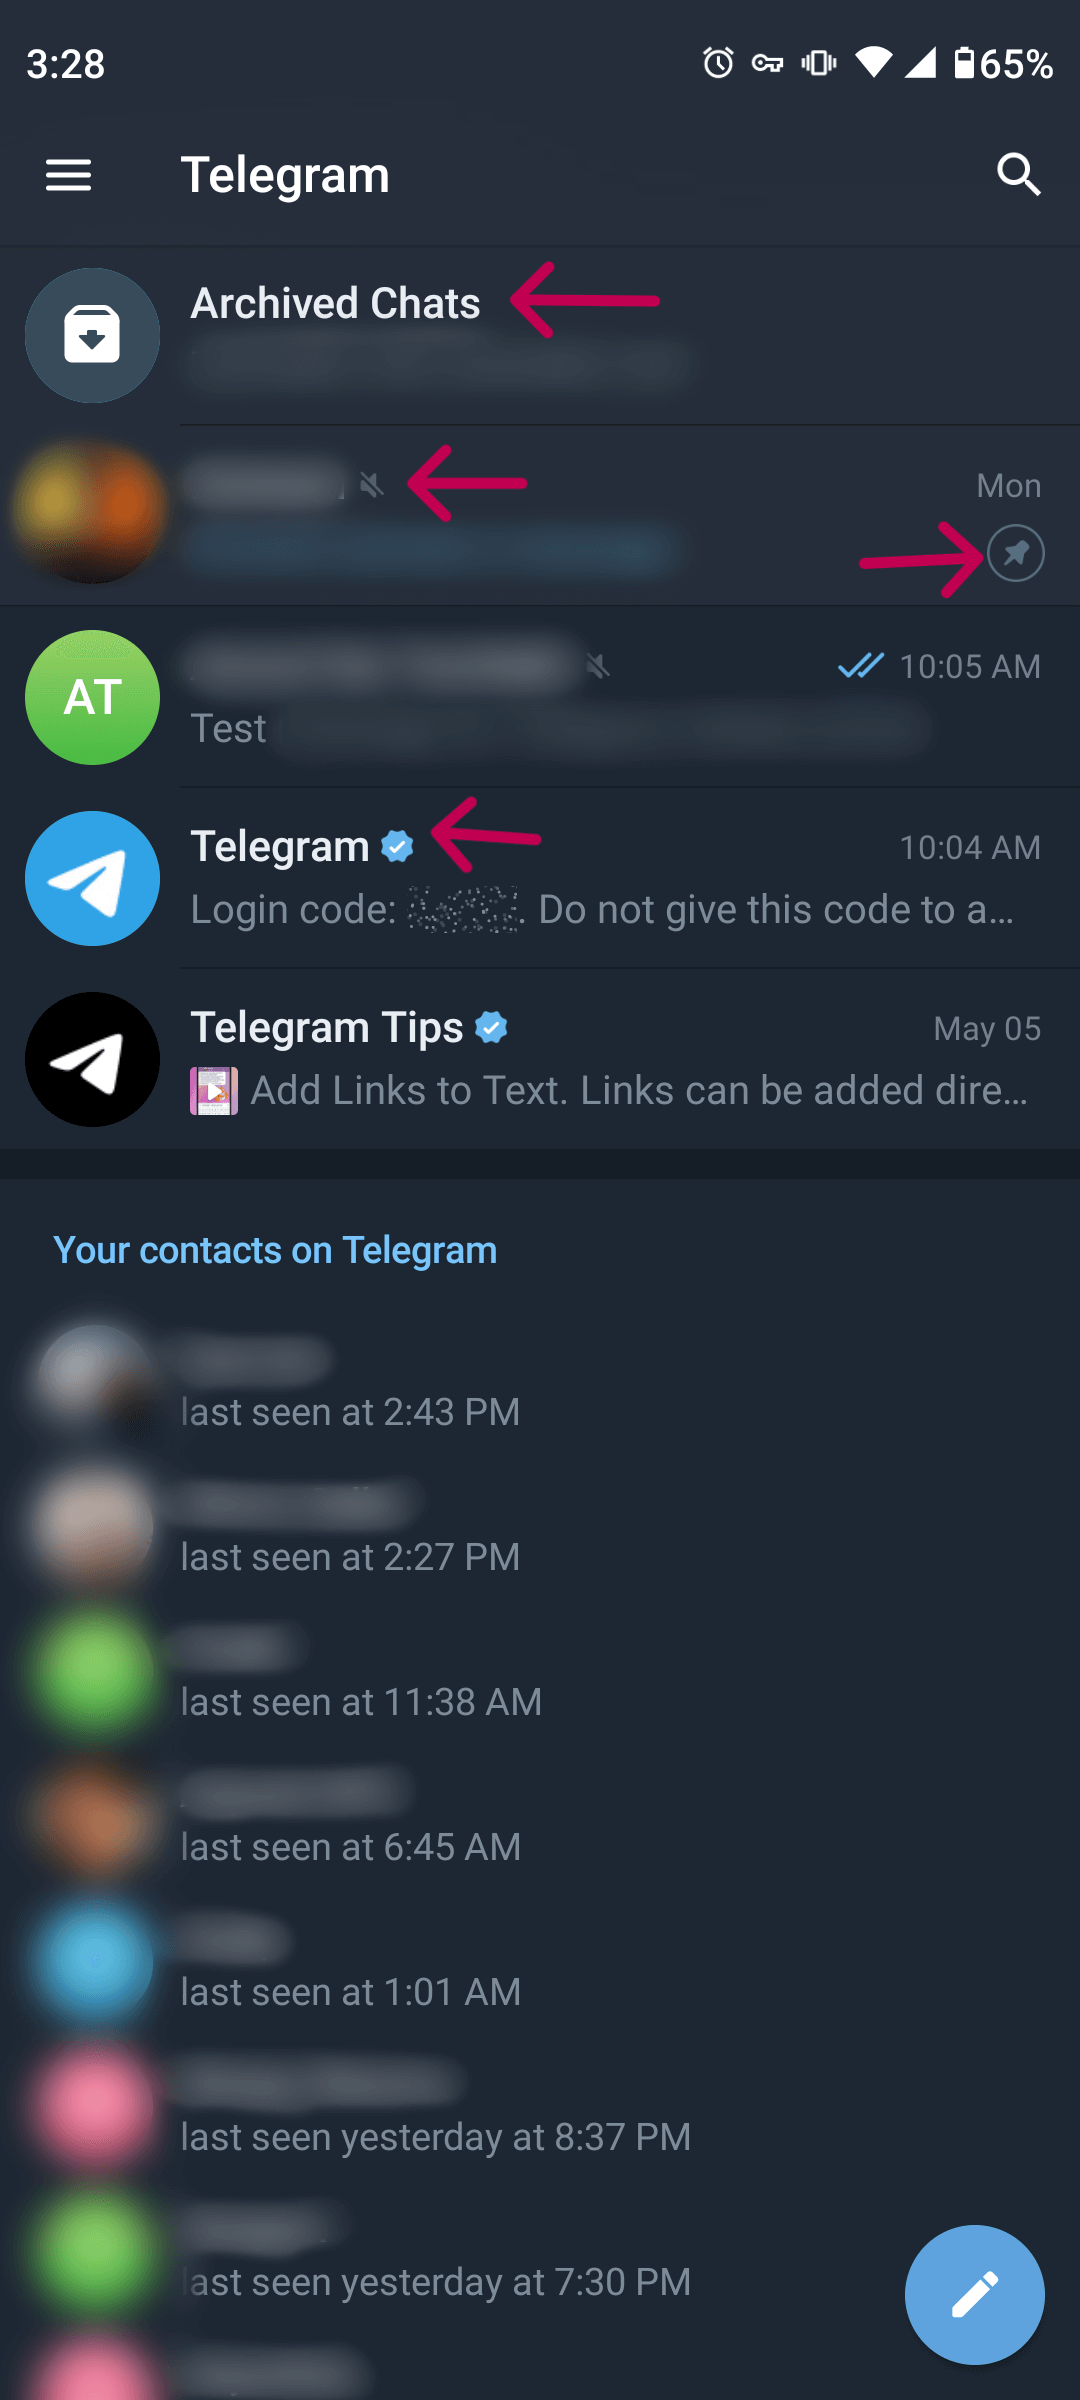 telegram home screen